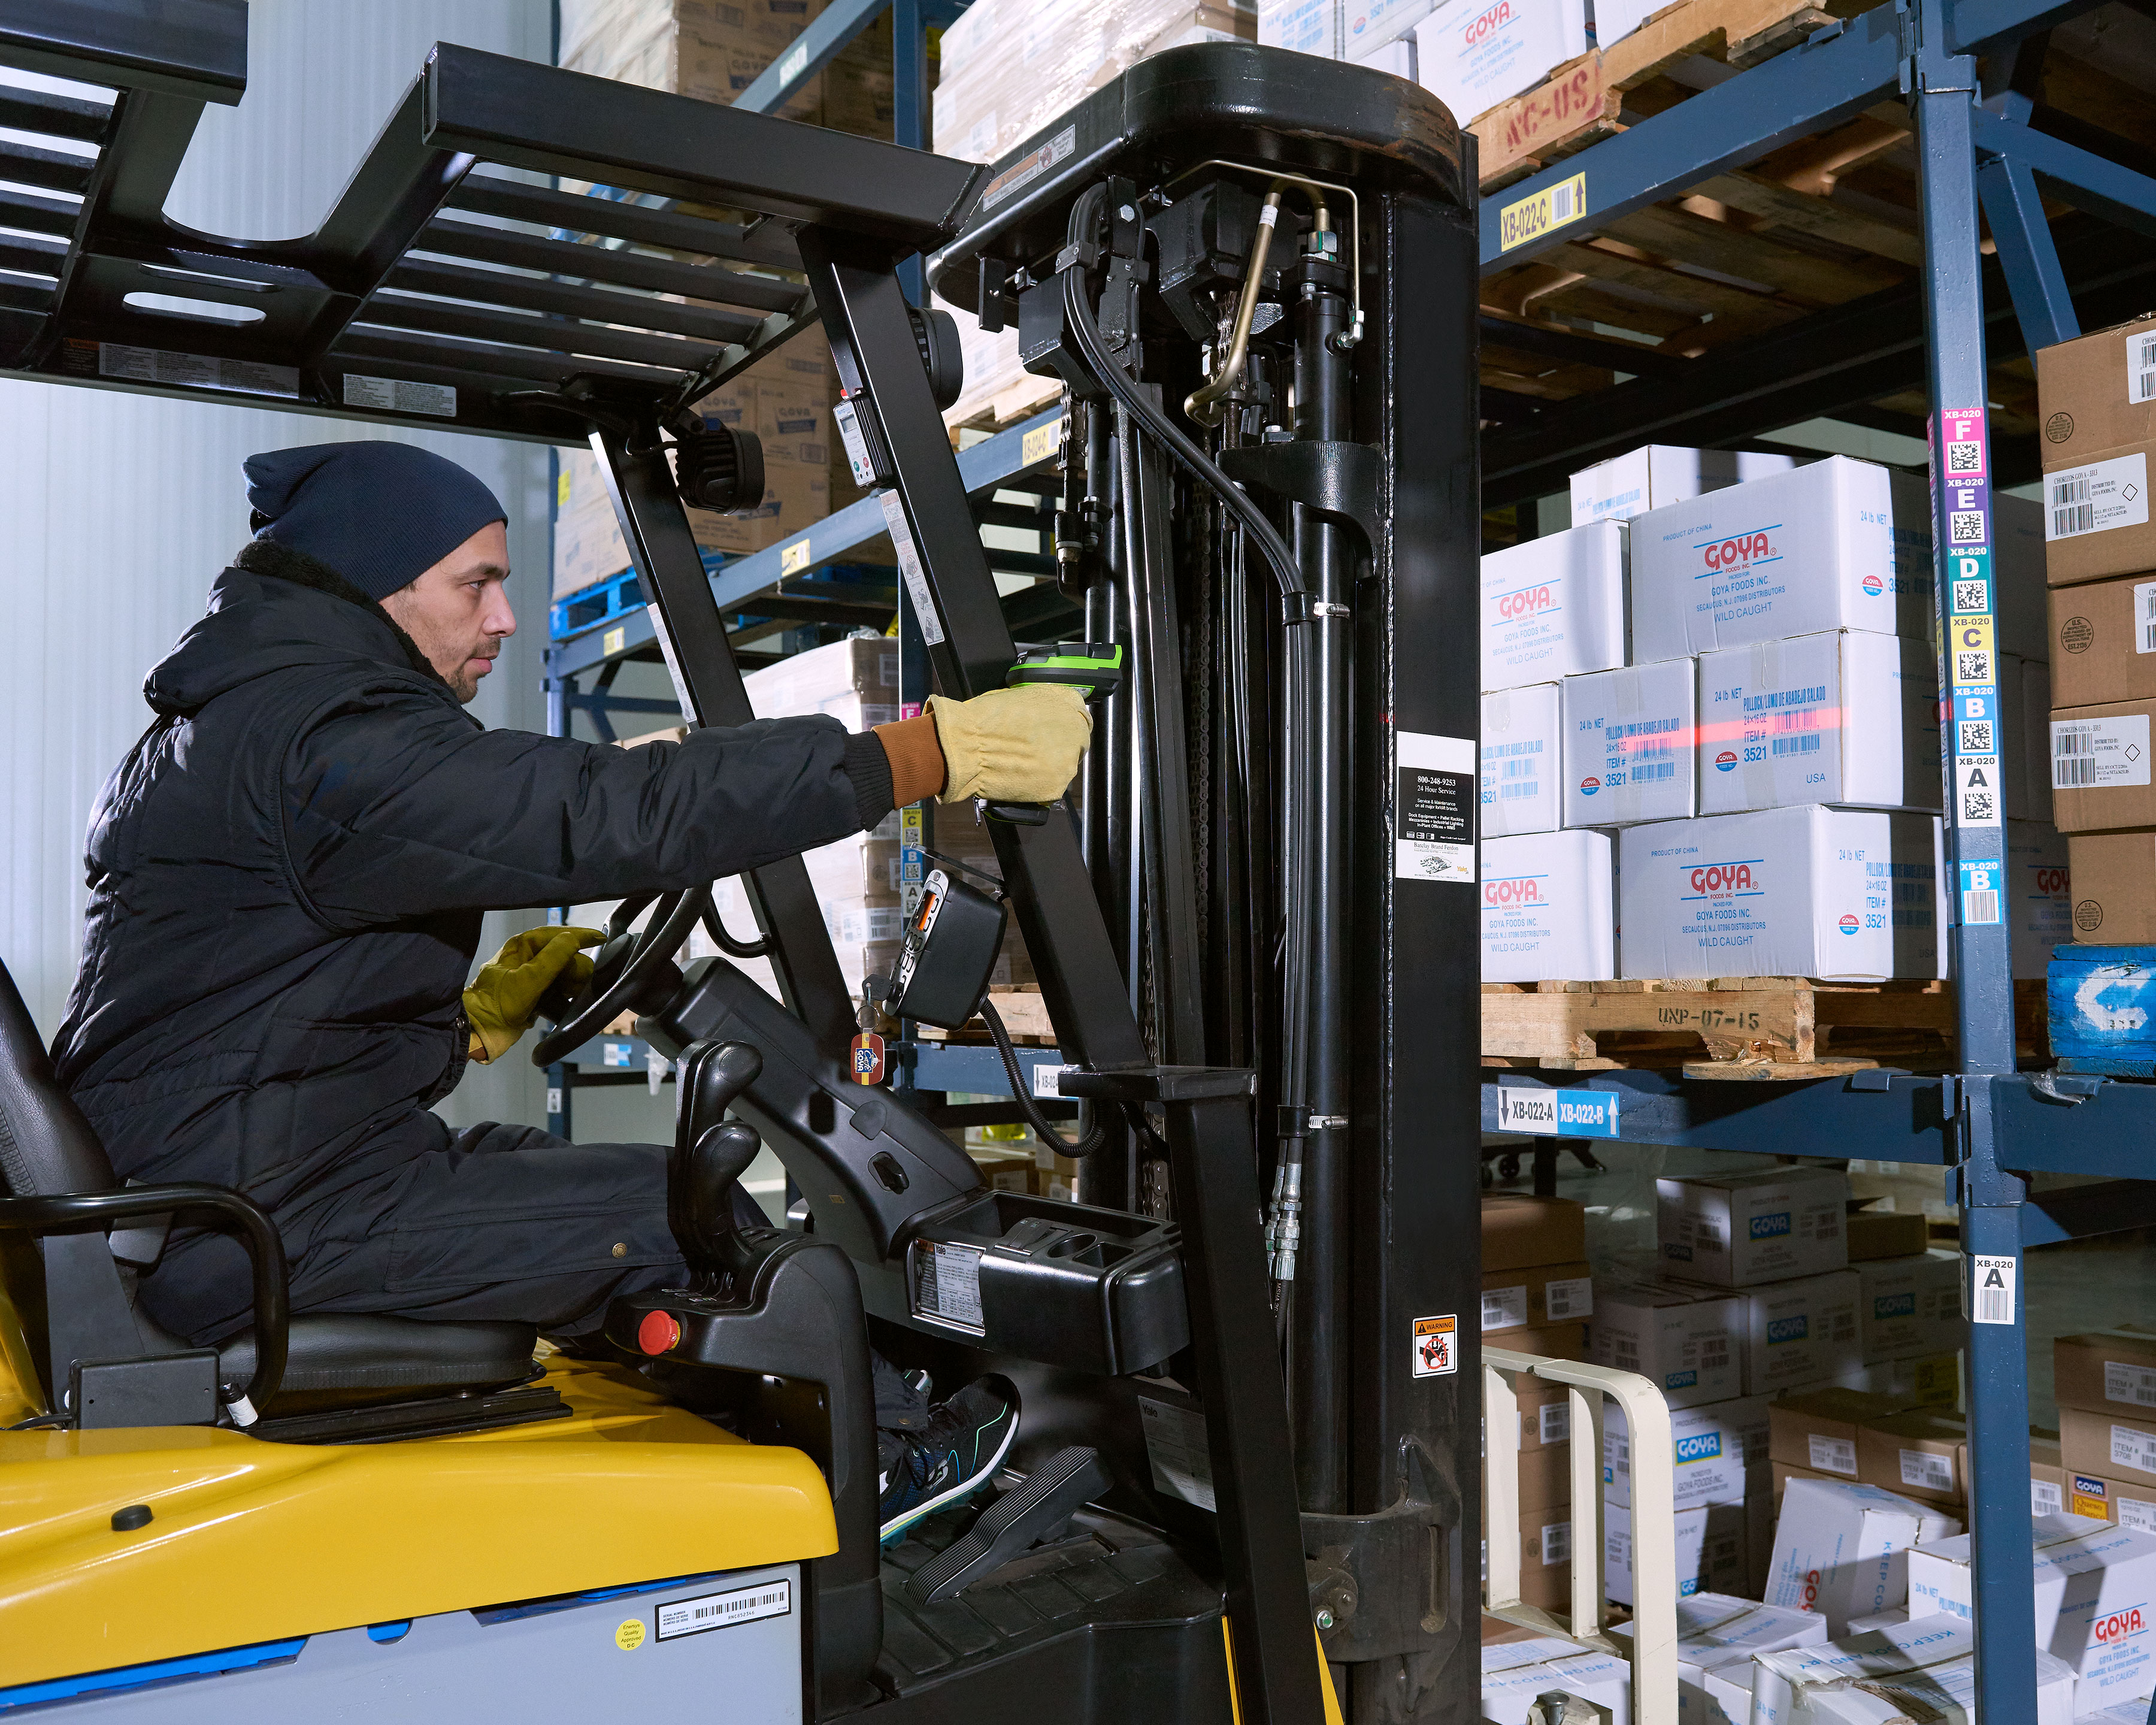 Worker uses Zebra LI3600 barcode scanner in a warehouse freezer